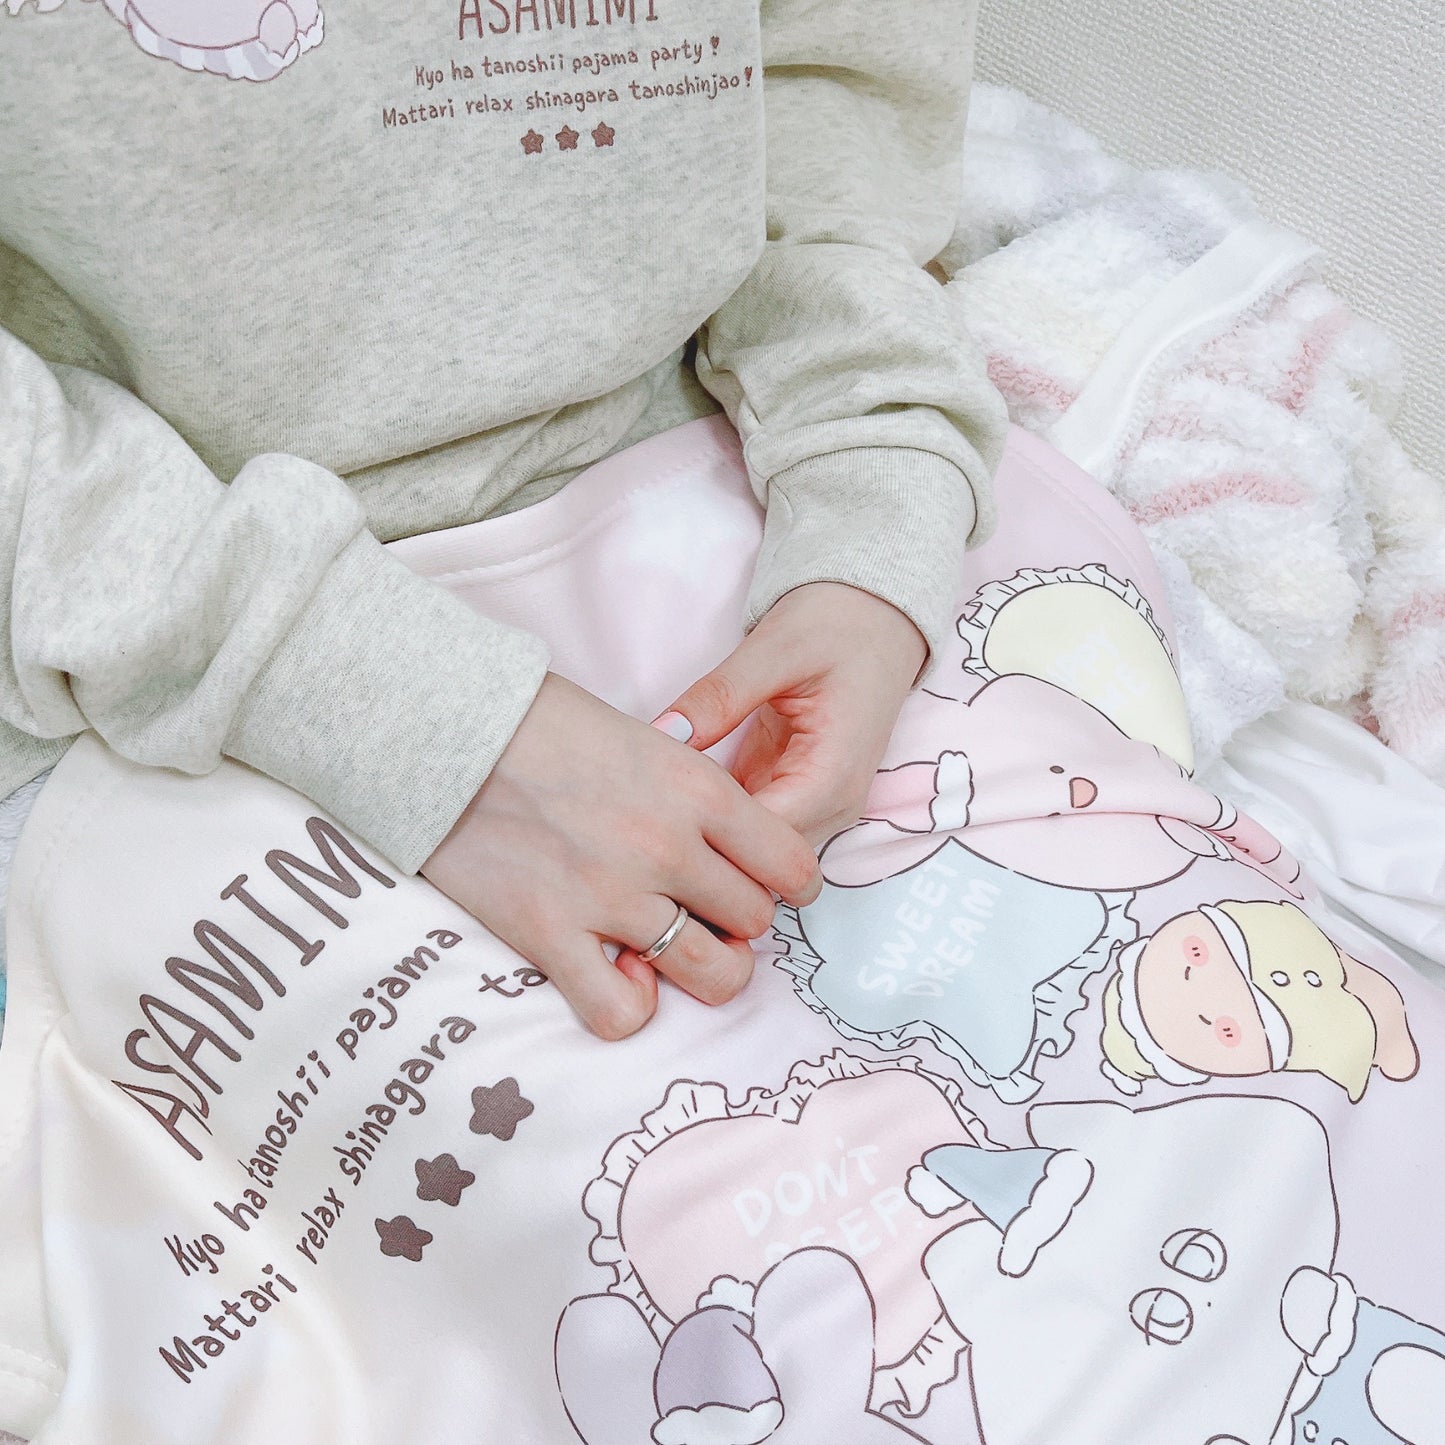 [Asamimi-chan] Blanket (pajama party)